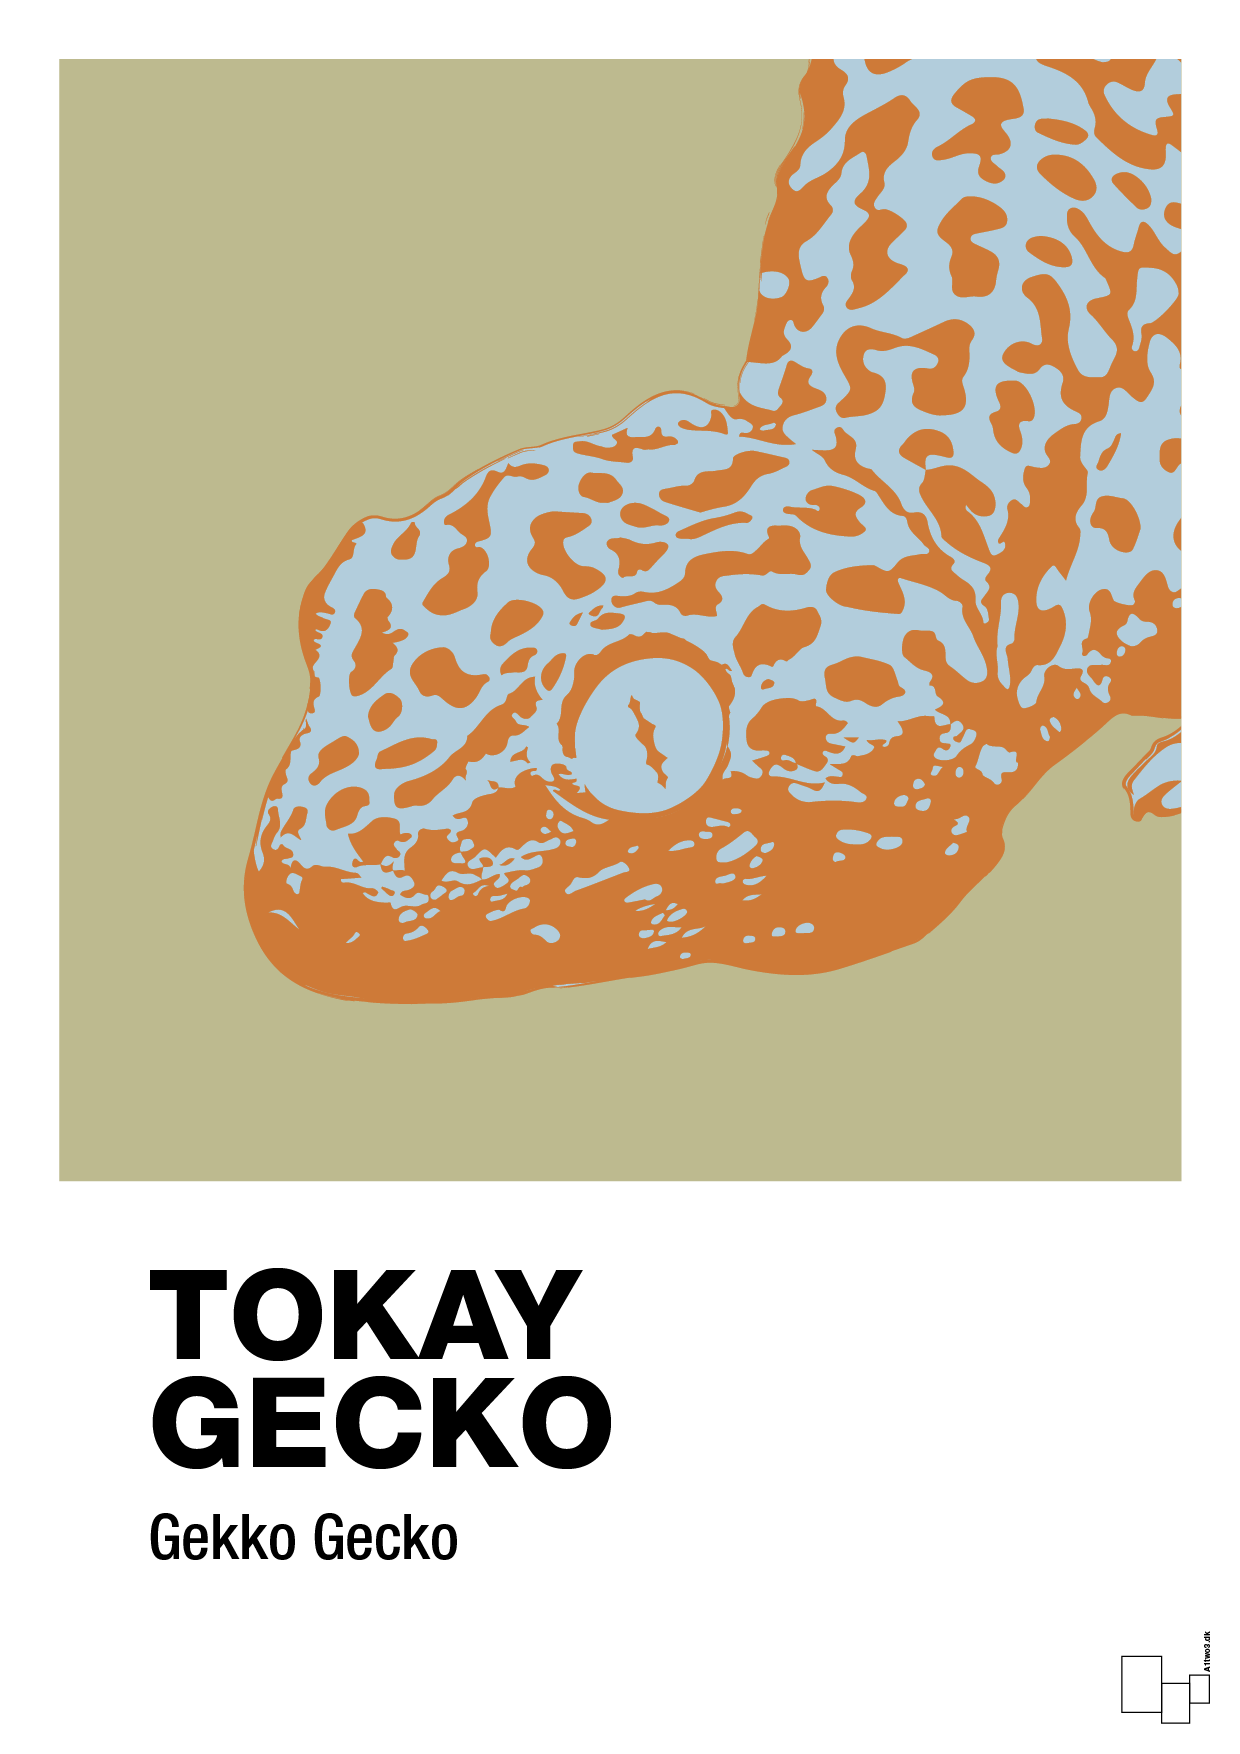 tokay gecko - Plakat med Videnskab i Back to Nature